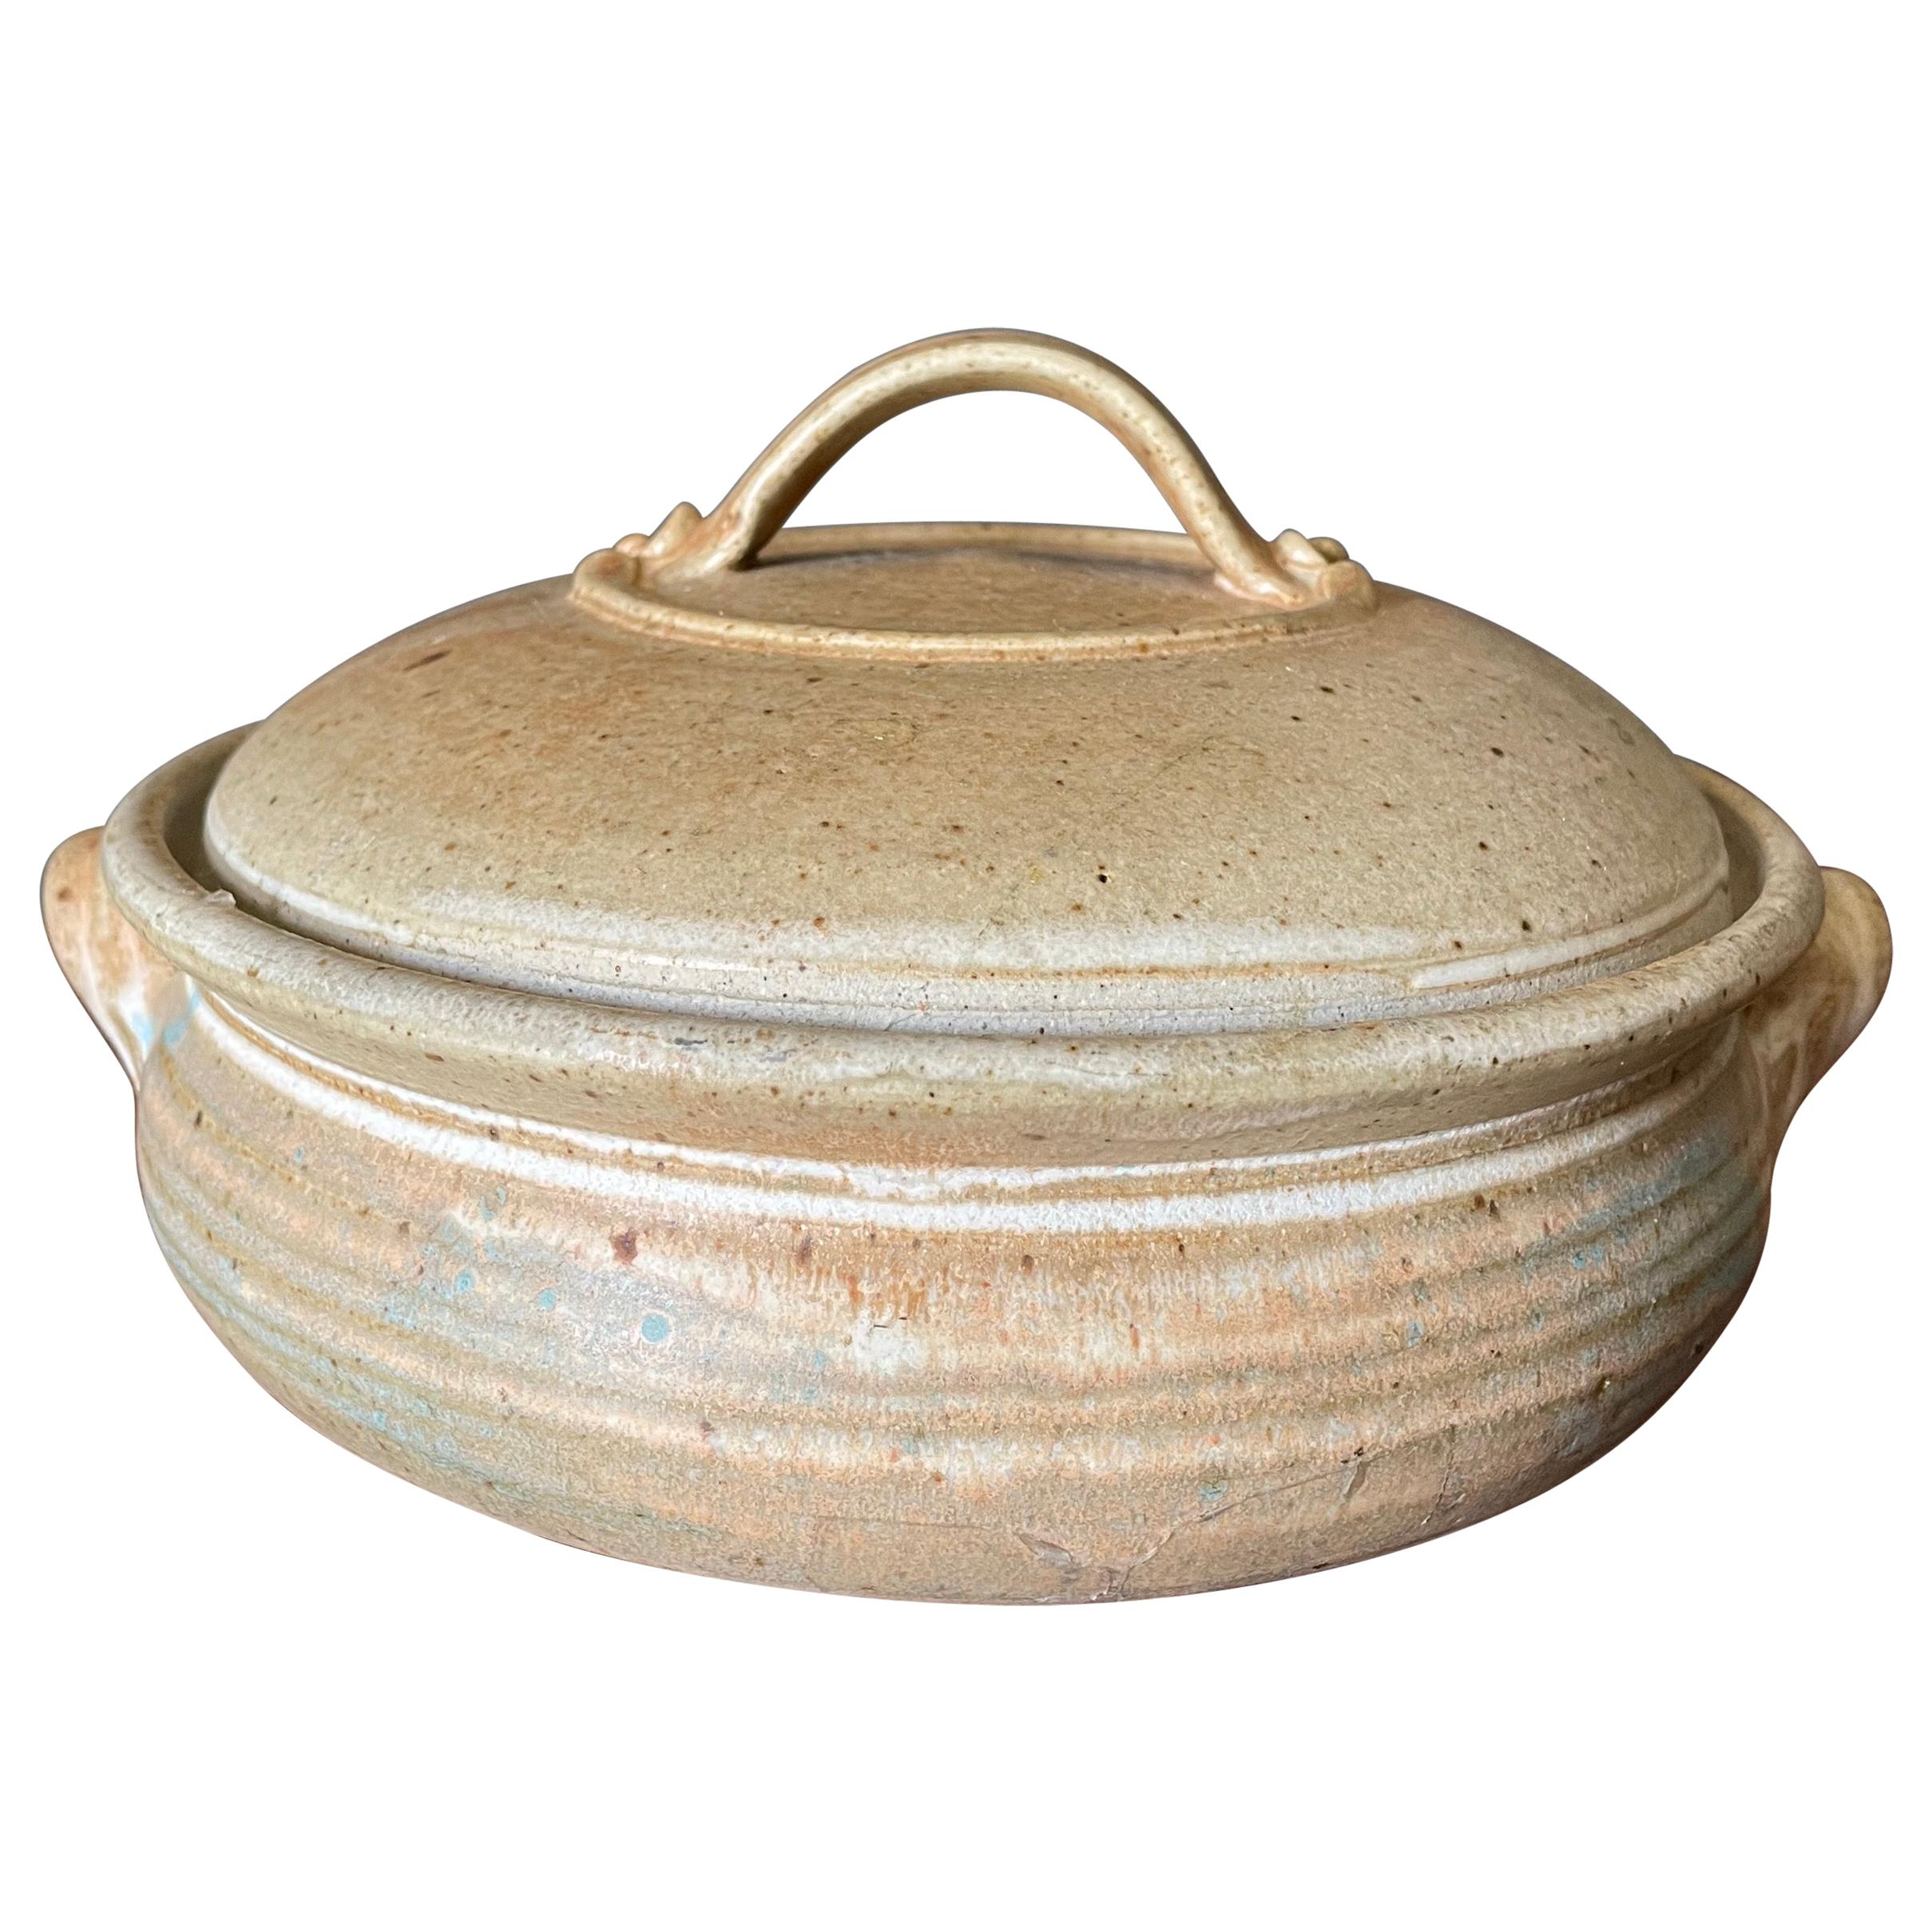 https://a.1stdibscdn.com/vintage-studio-pottery-lidded-ceramic-circa-1970s-for-sale/1121189/f_246933821627586679695/24693382_master.jpeg